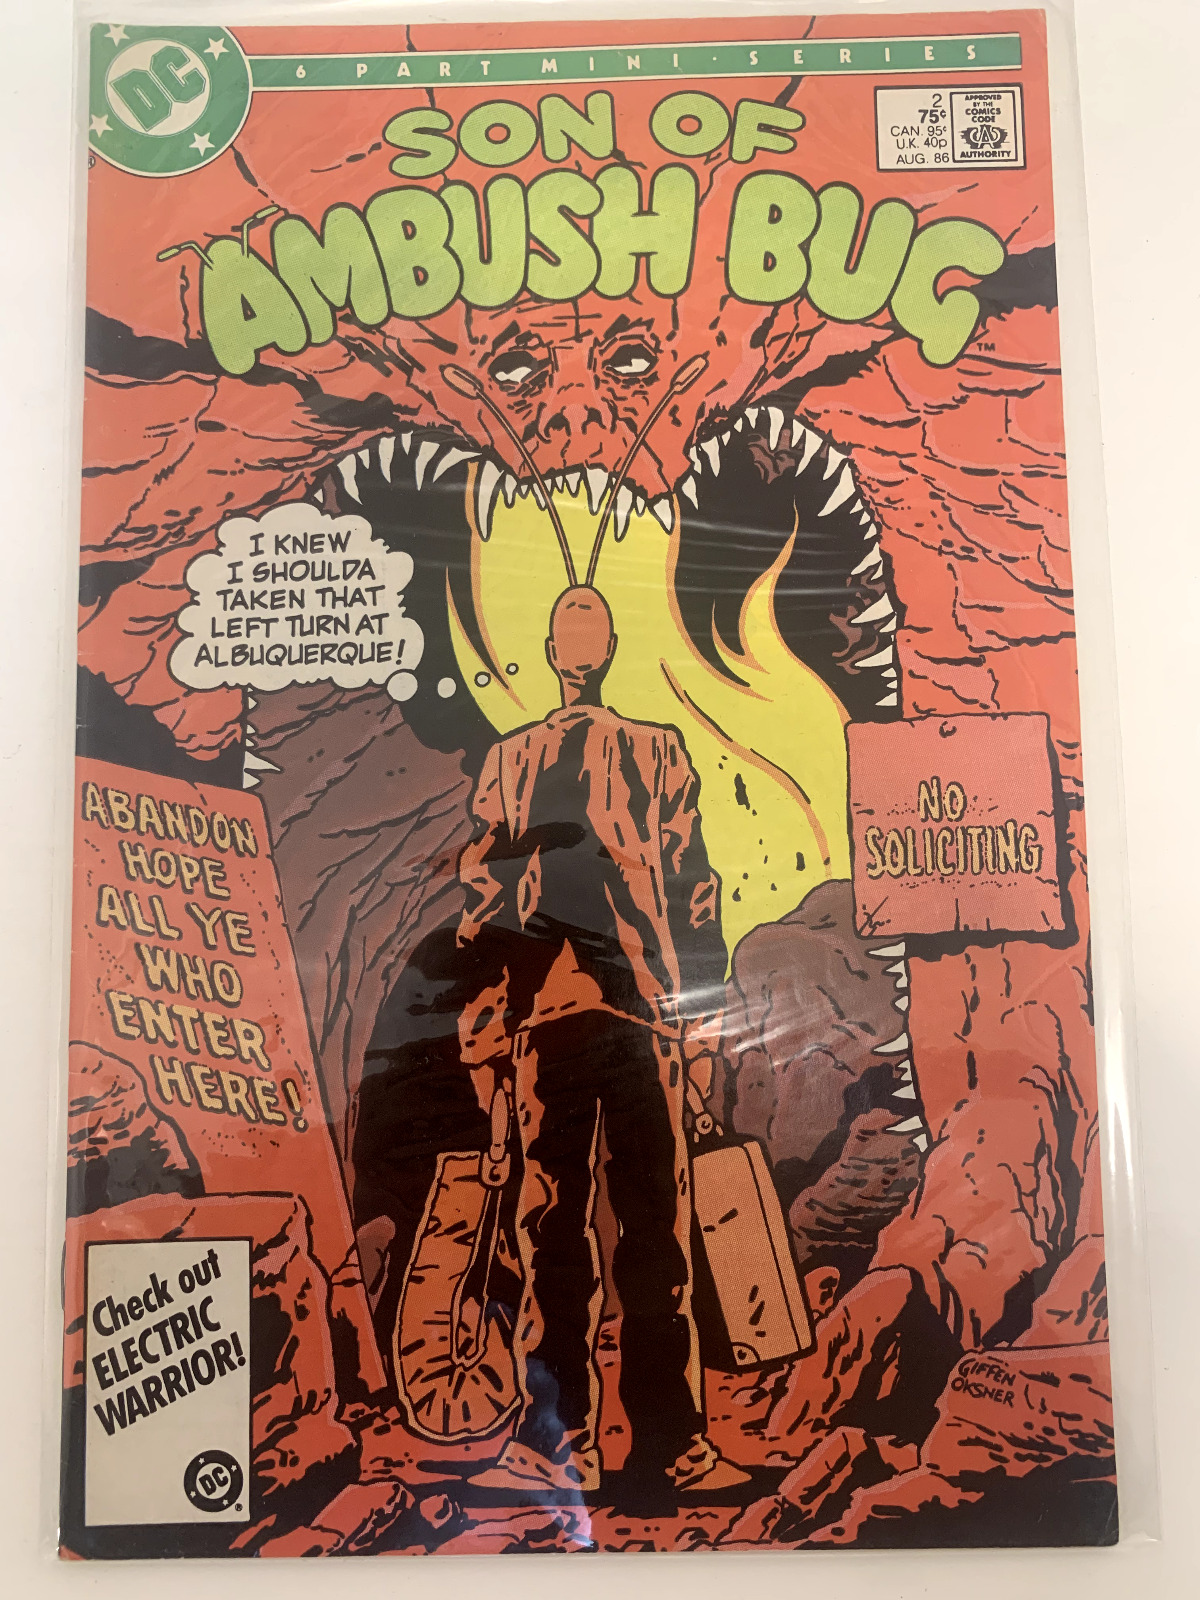 Son of Ambush Bug #2 VF; DC | we combine shipping